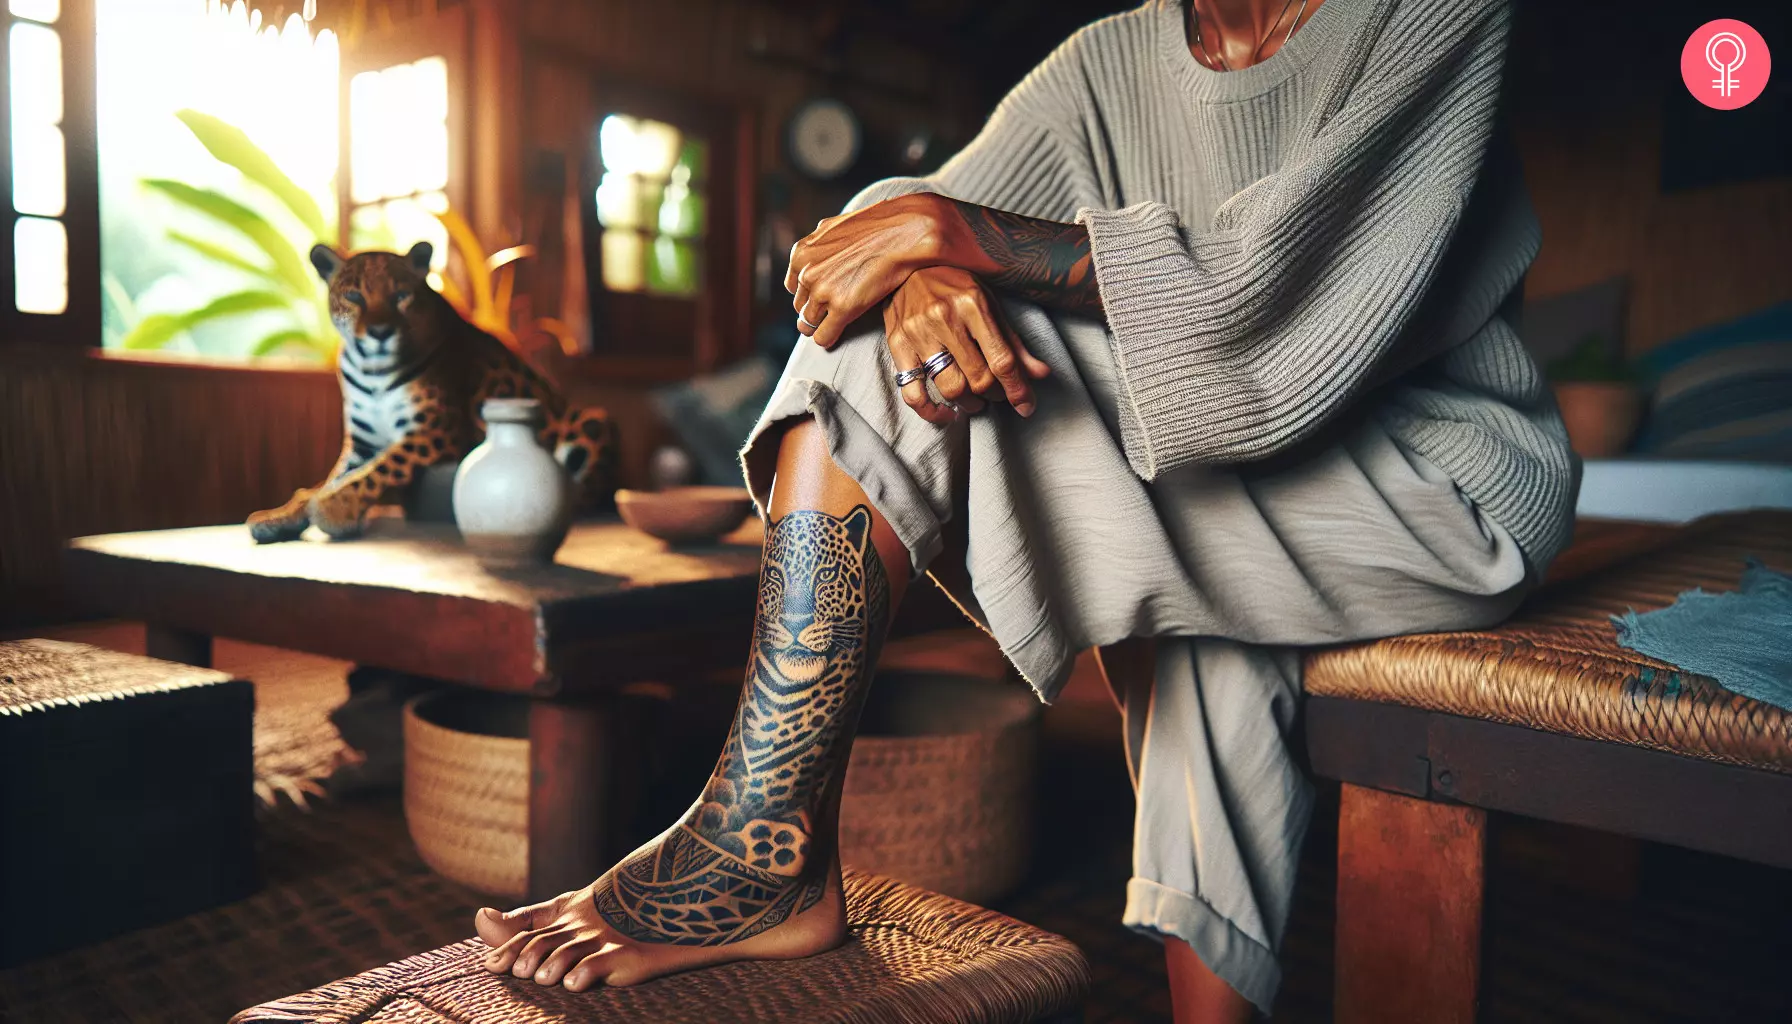 A Mayan Animal tattoo on a woman’s leg